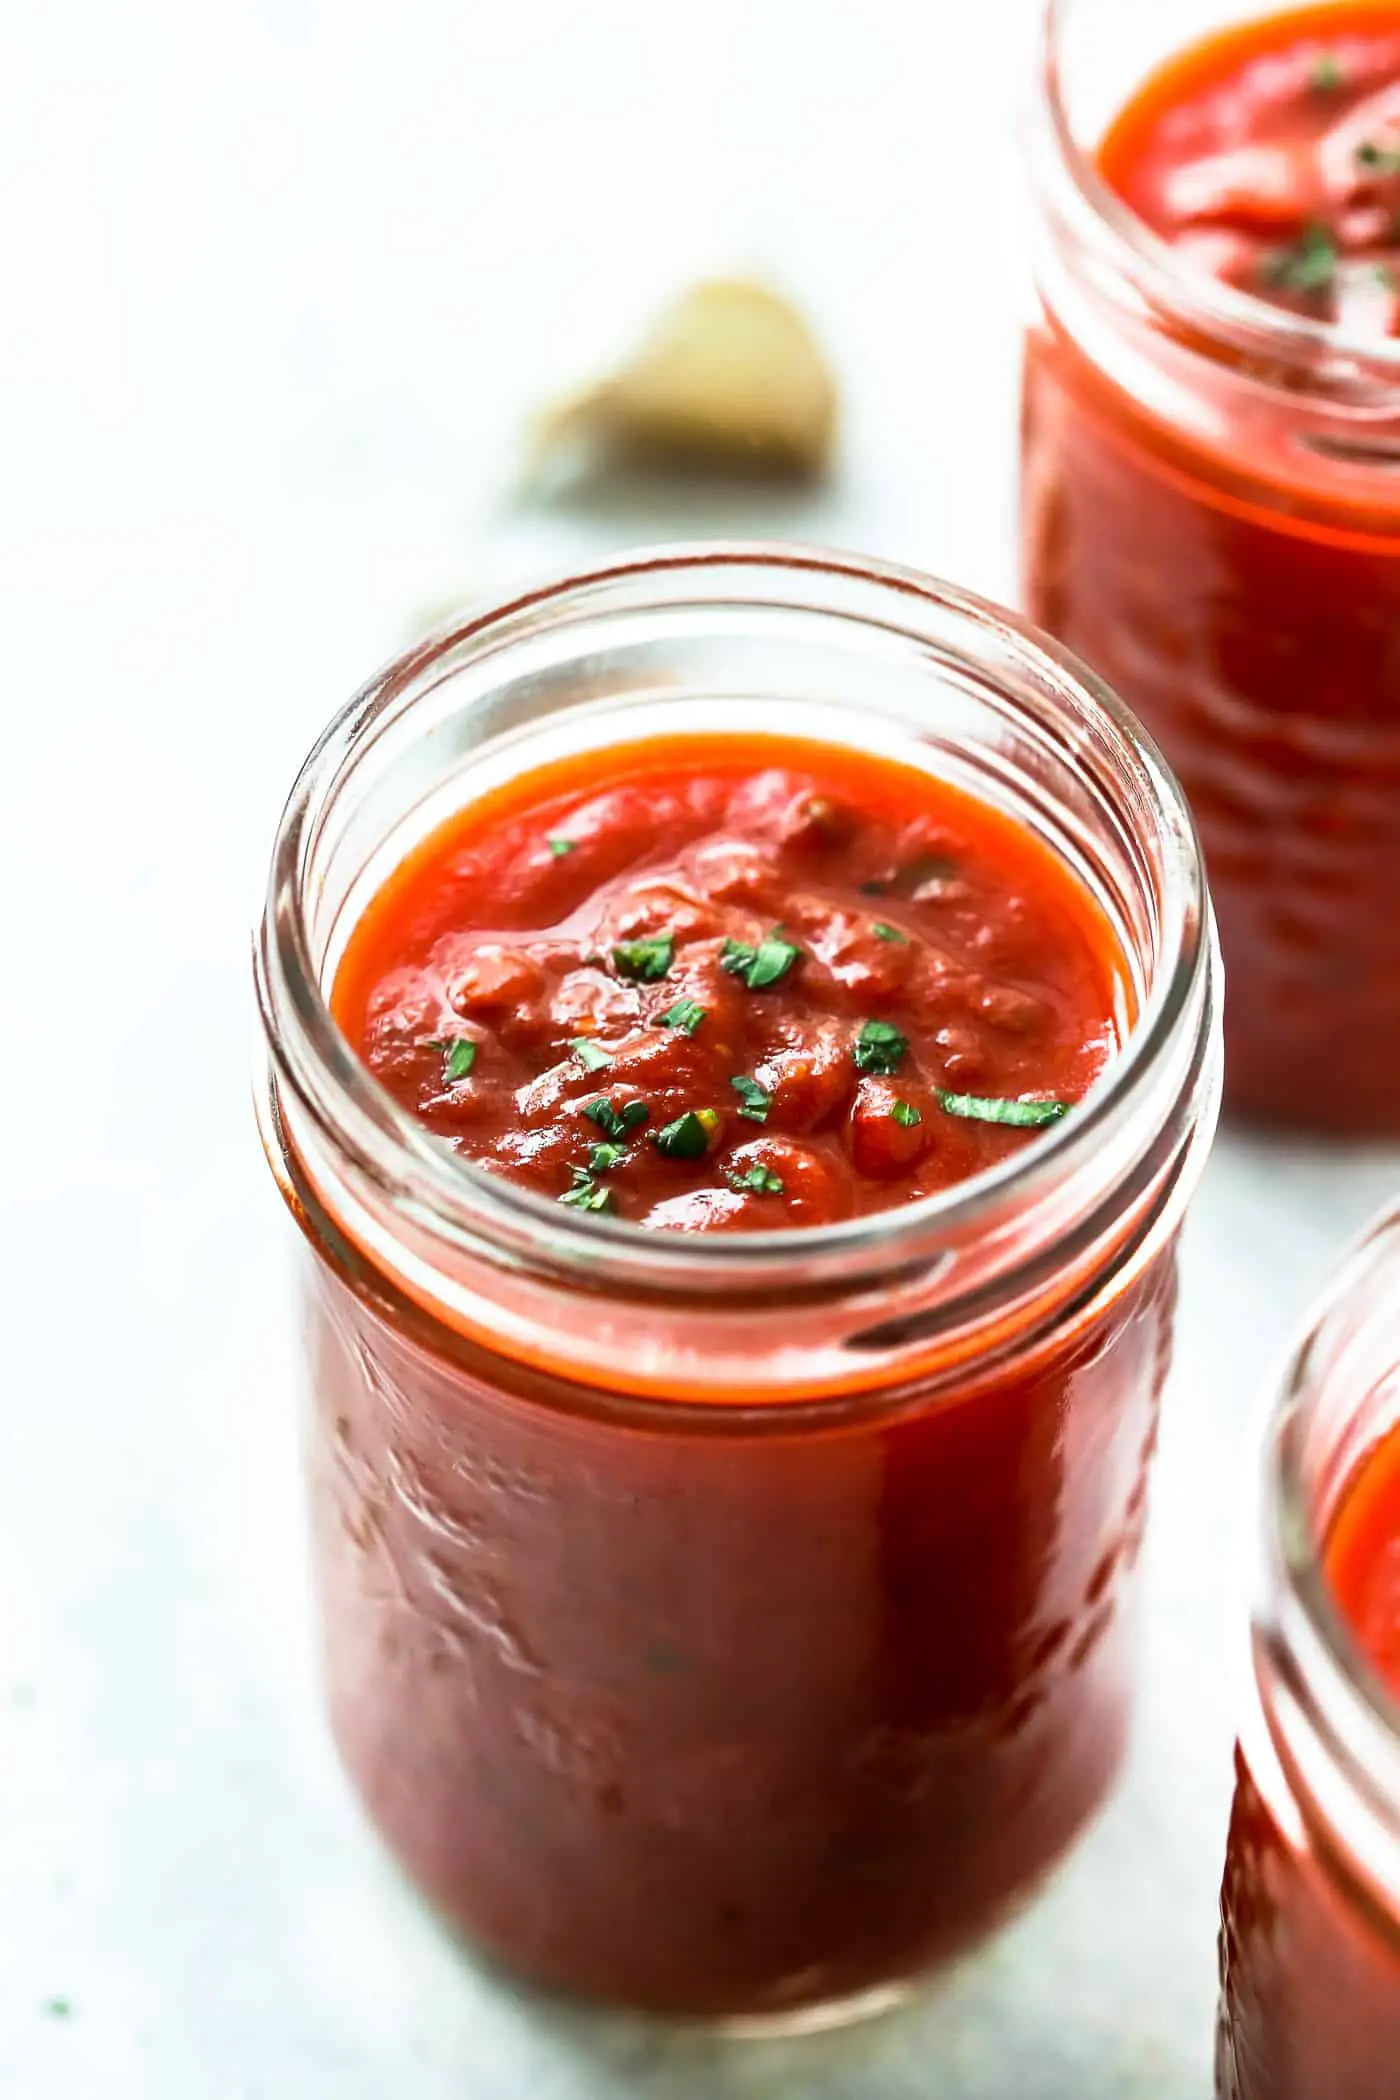 How to make Basic Tomato Sauce (Quick